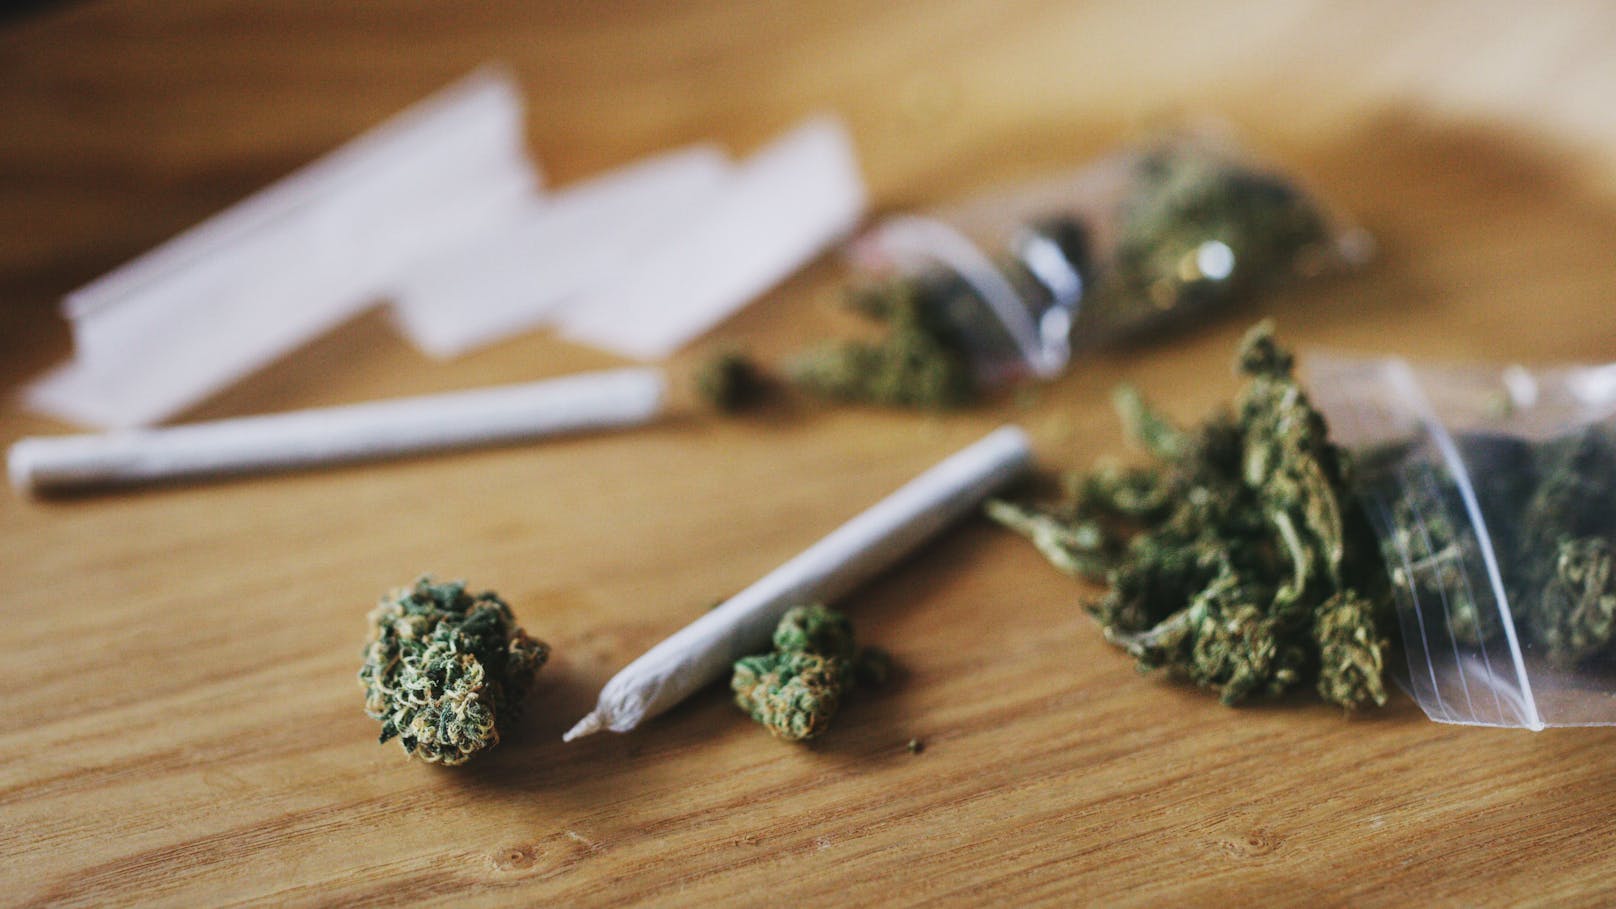 Quartett erzeugte 45 Kilo Cannabis - Festnahme